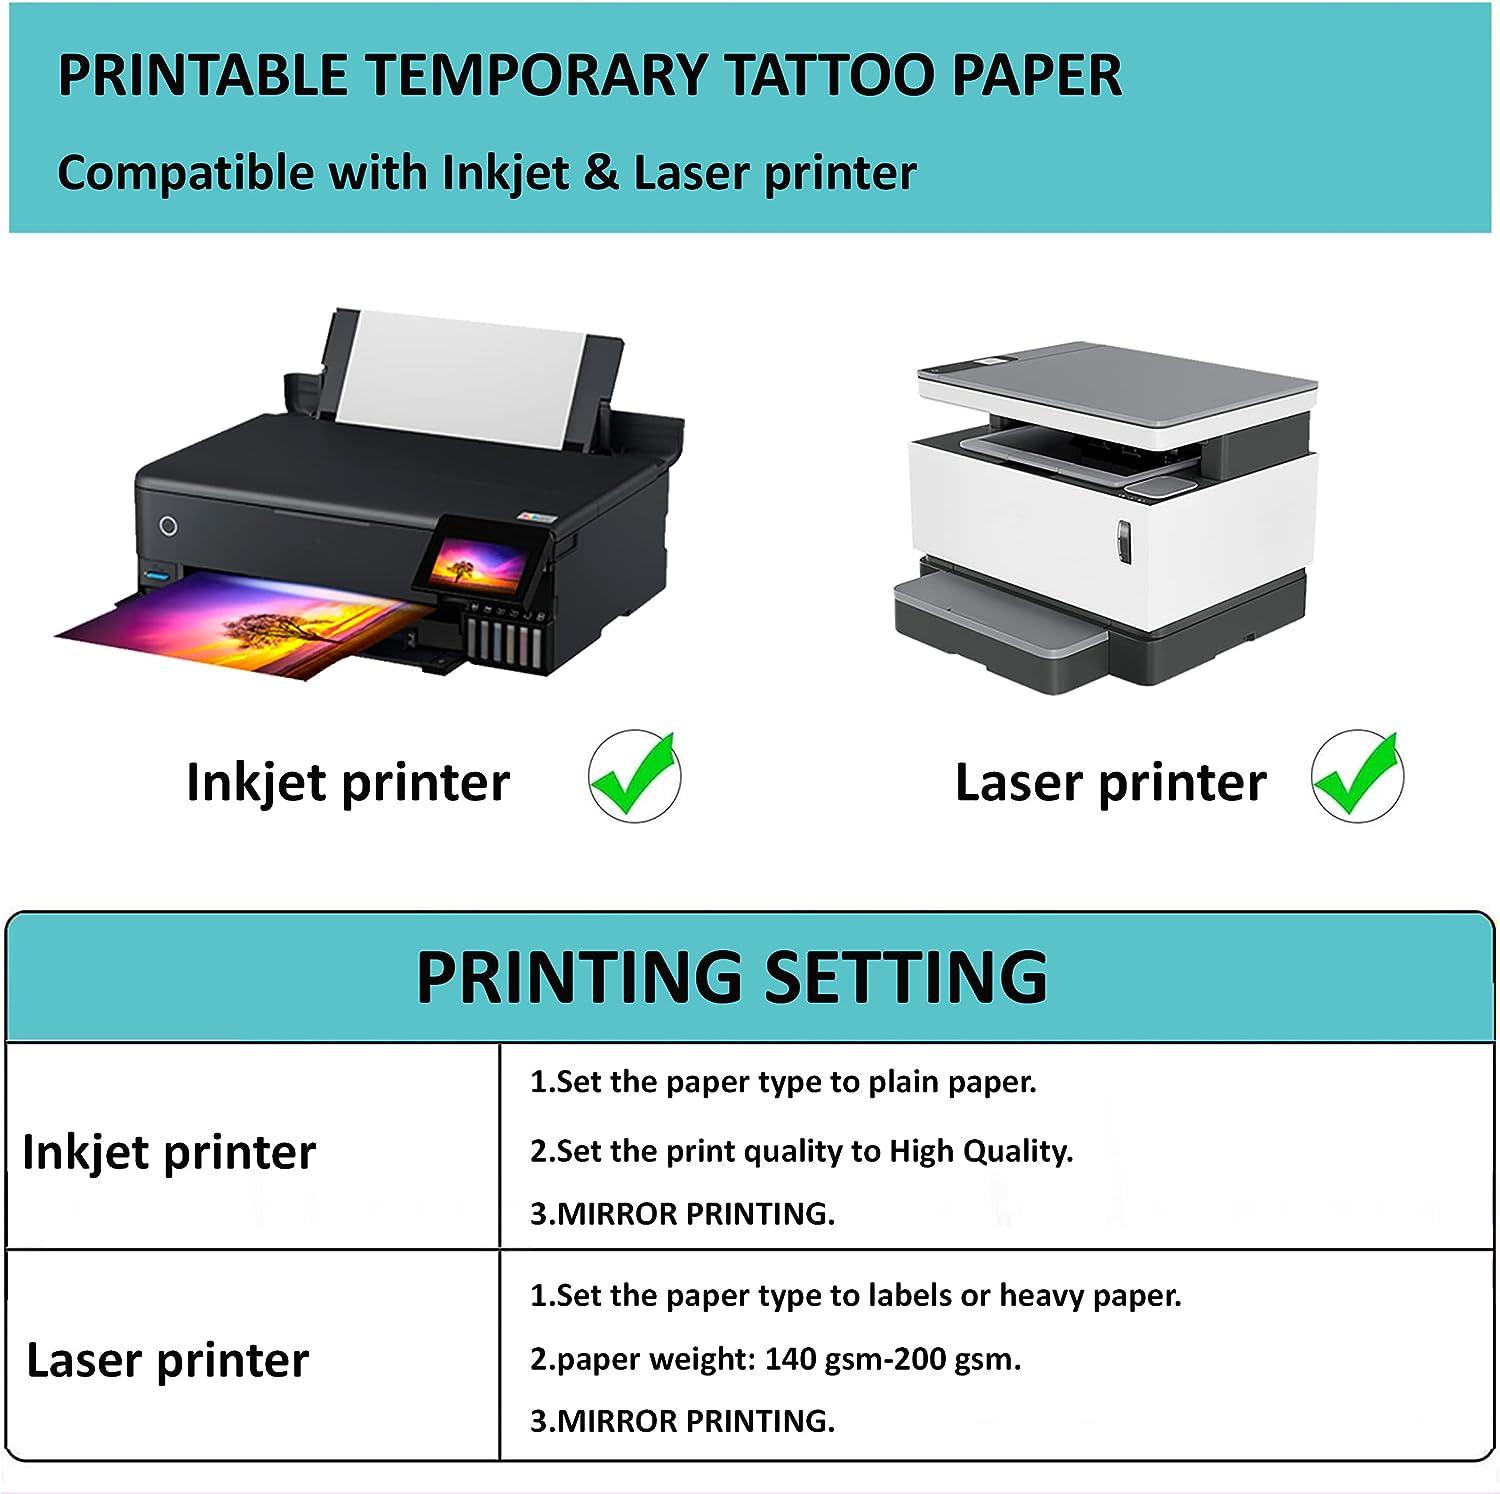 Temporary Tattoo Paper for Inkjet & Laser Printers